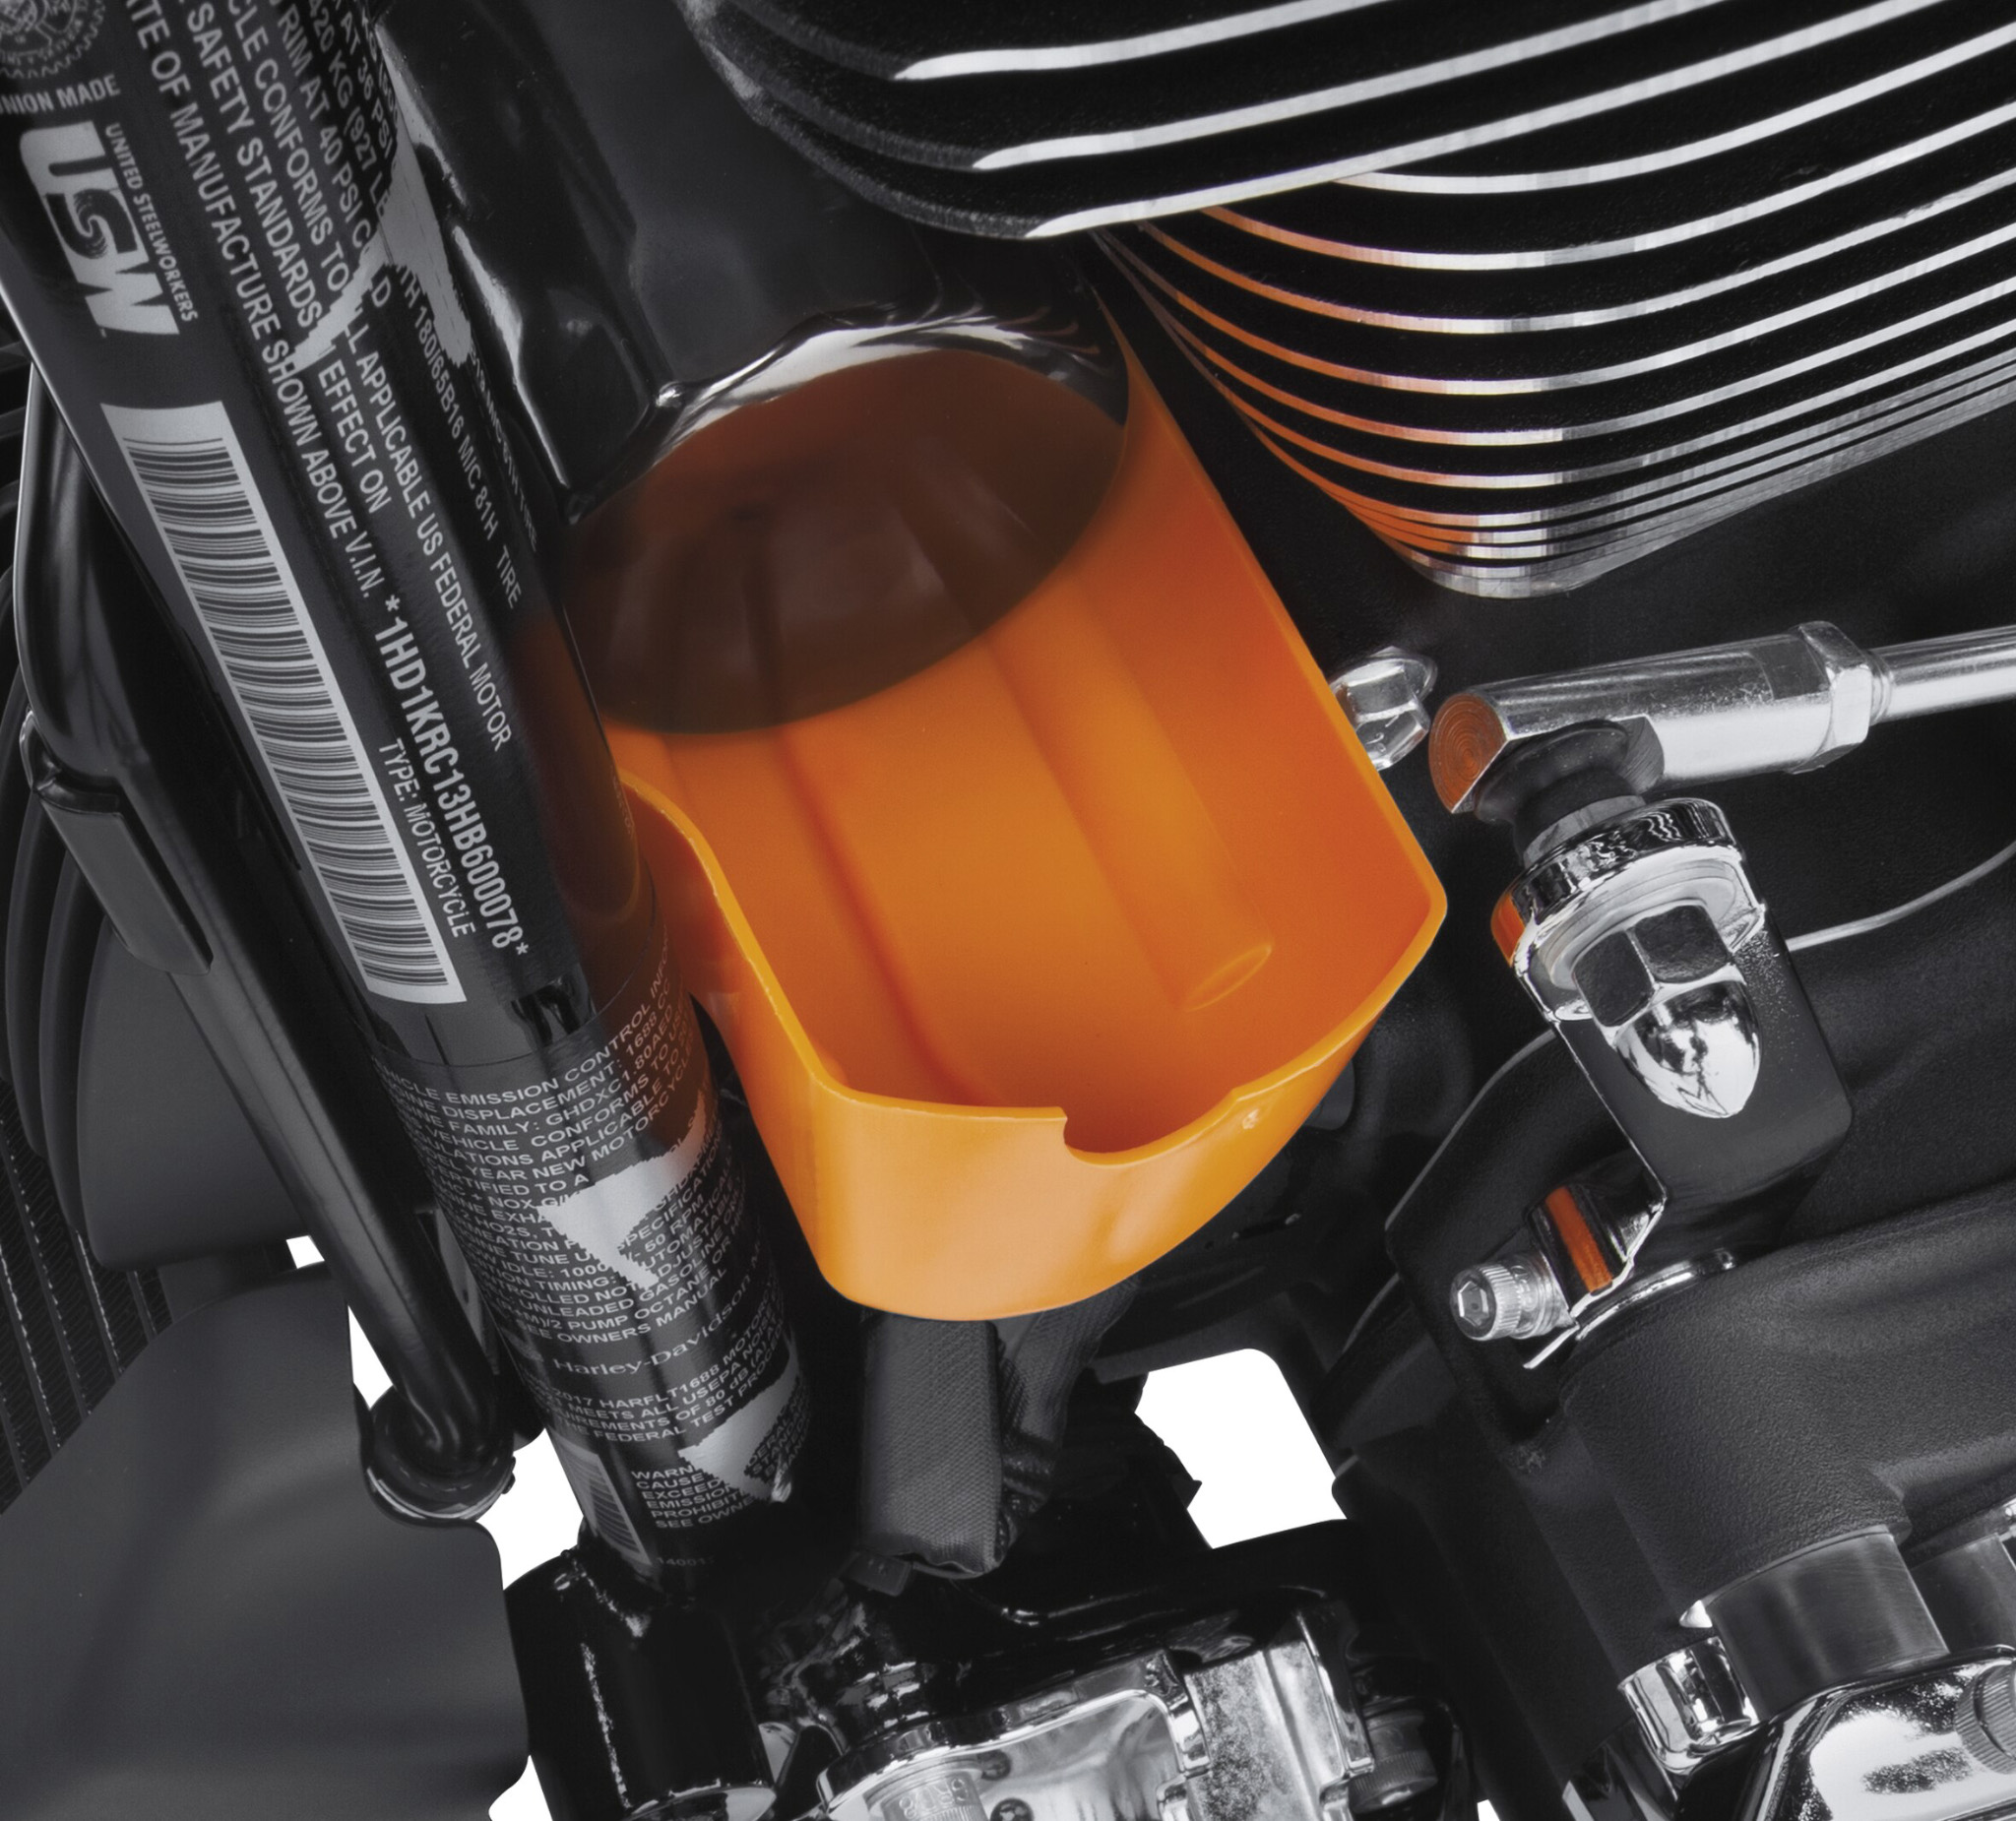 JSP Brand Orange DRIP-FREE OIL FILTER FUNNEL HARLEY MOTORCYCLE SERVICE OIL CATCH PAN DRAIN OIL for Harley Davidson Motorcycles Orange or Black 